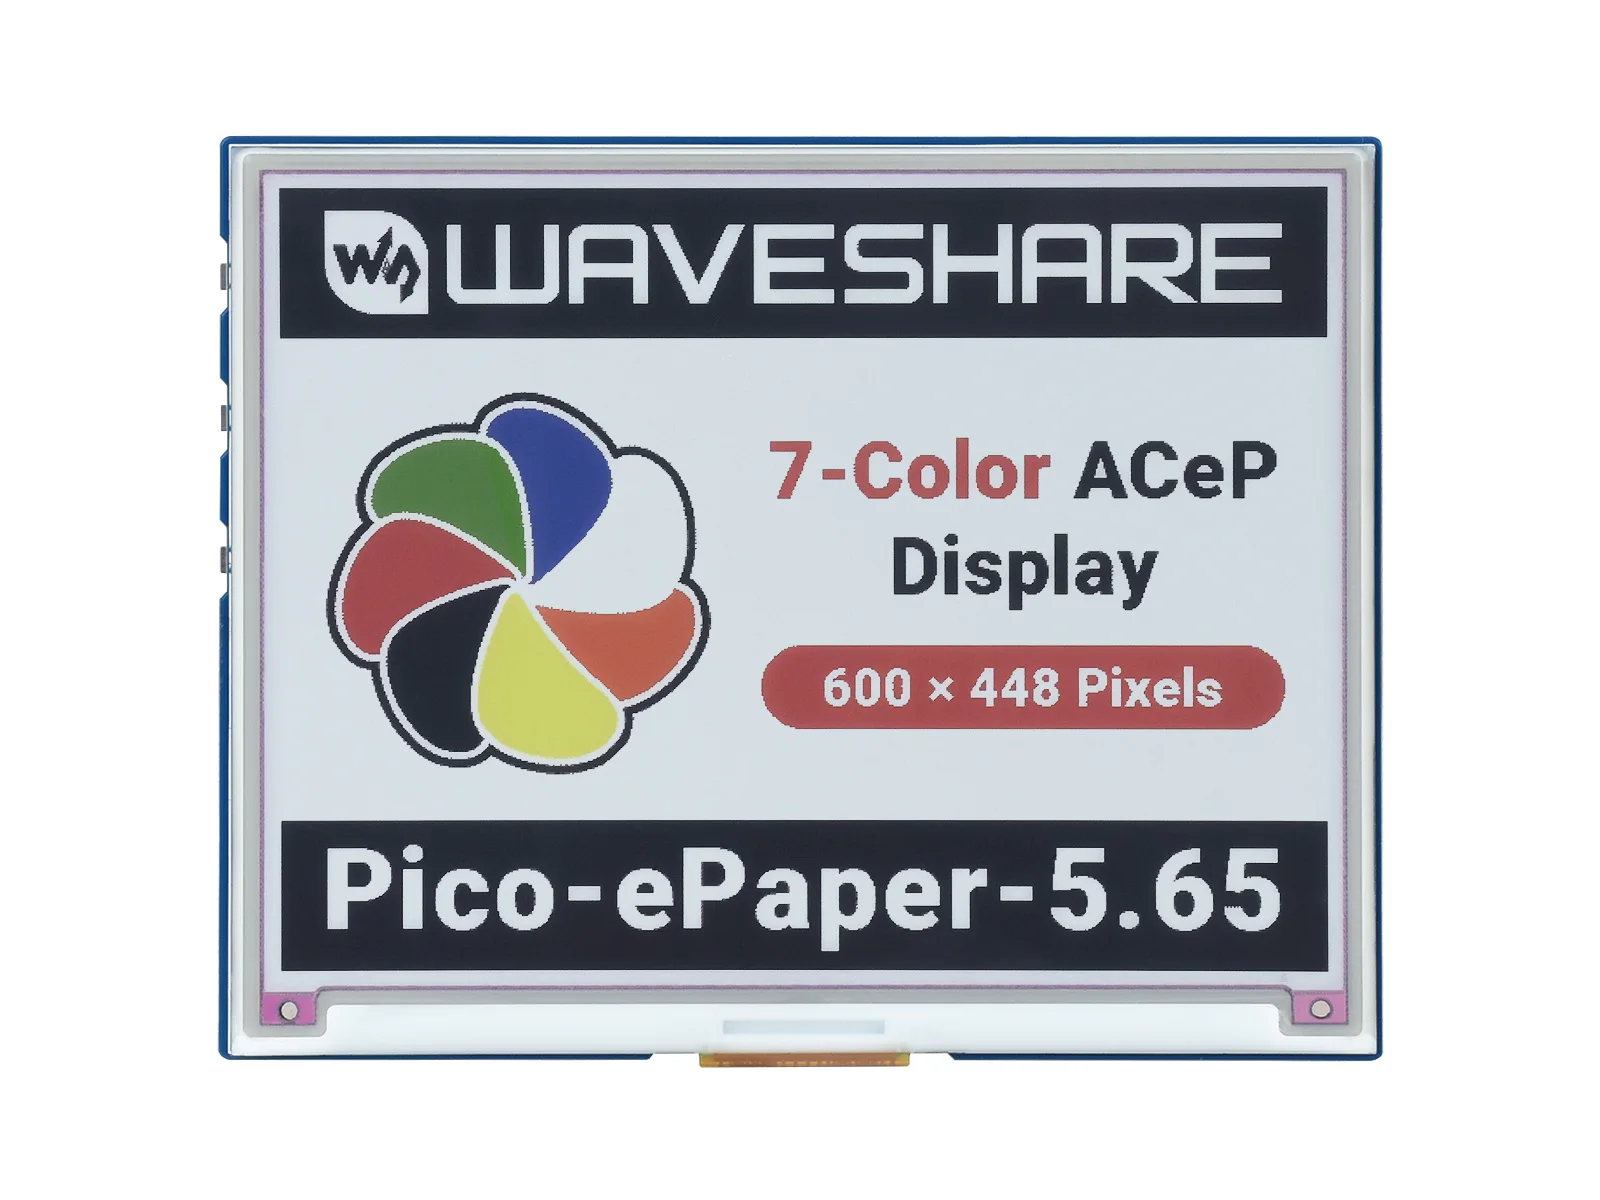 5.65inch Colorful E-Paper E-Ink Display Module For Raspberry Pi Pico, 600 448 Pixels, ACeP 7-Color